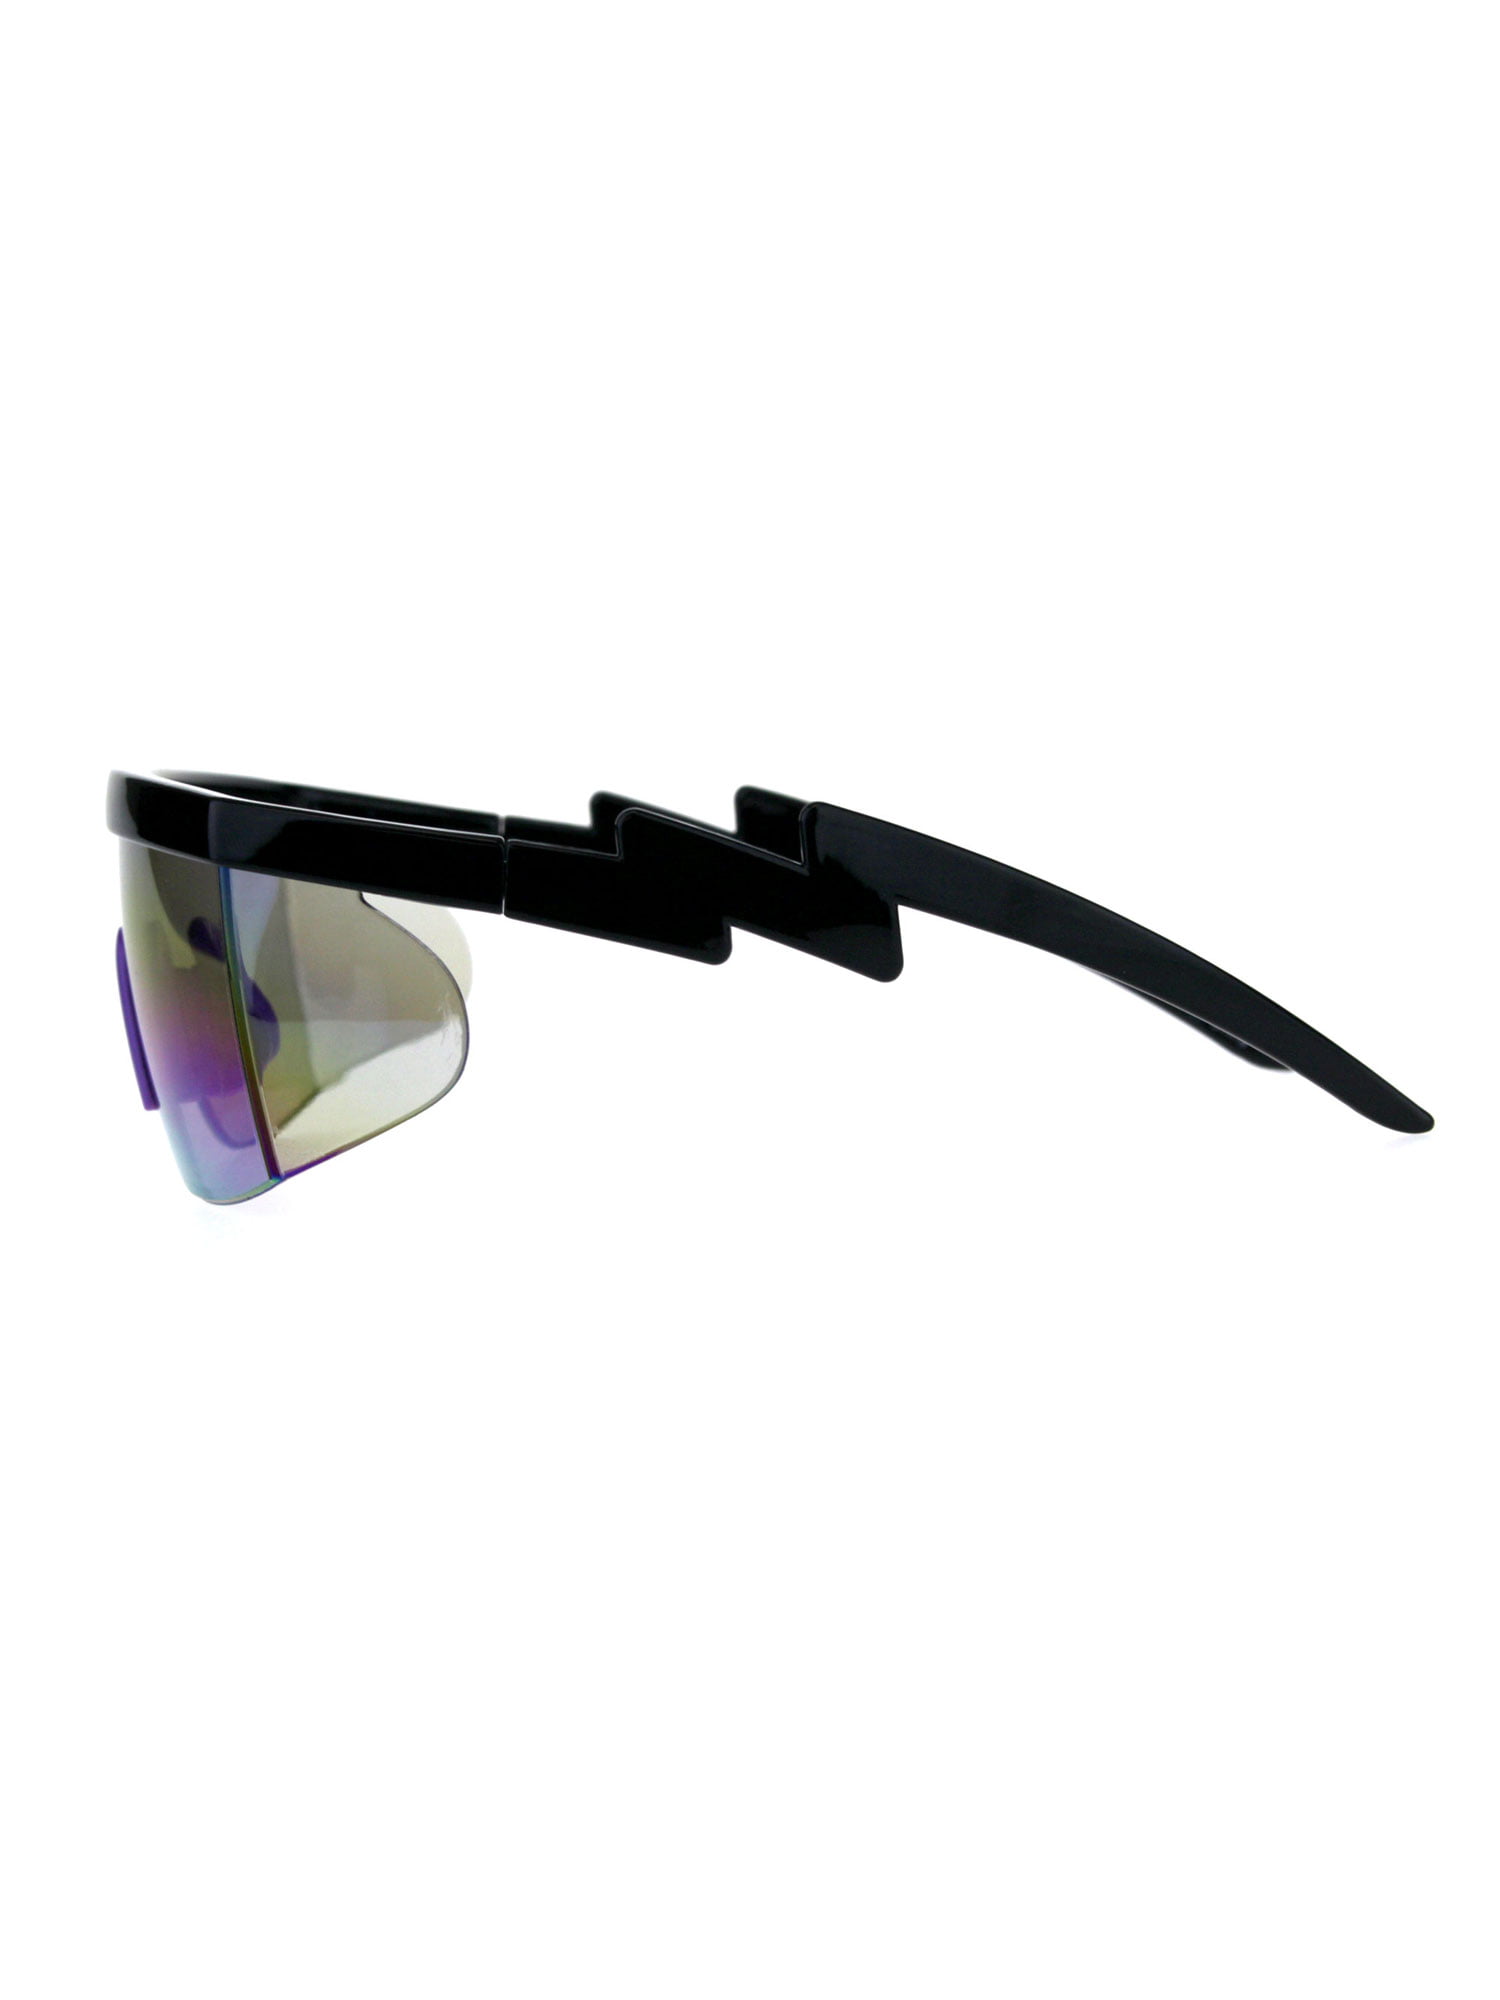 SunglassUP Super Oversize Flat Top Geometric Single Face Shield Neon Visor 80s Style Sunglasses with Mirrored or Smoke Lens 